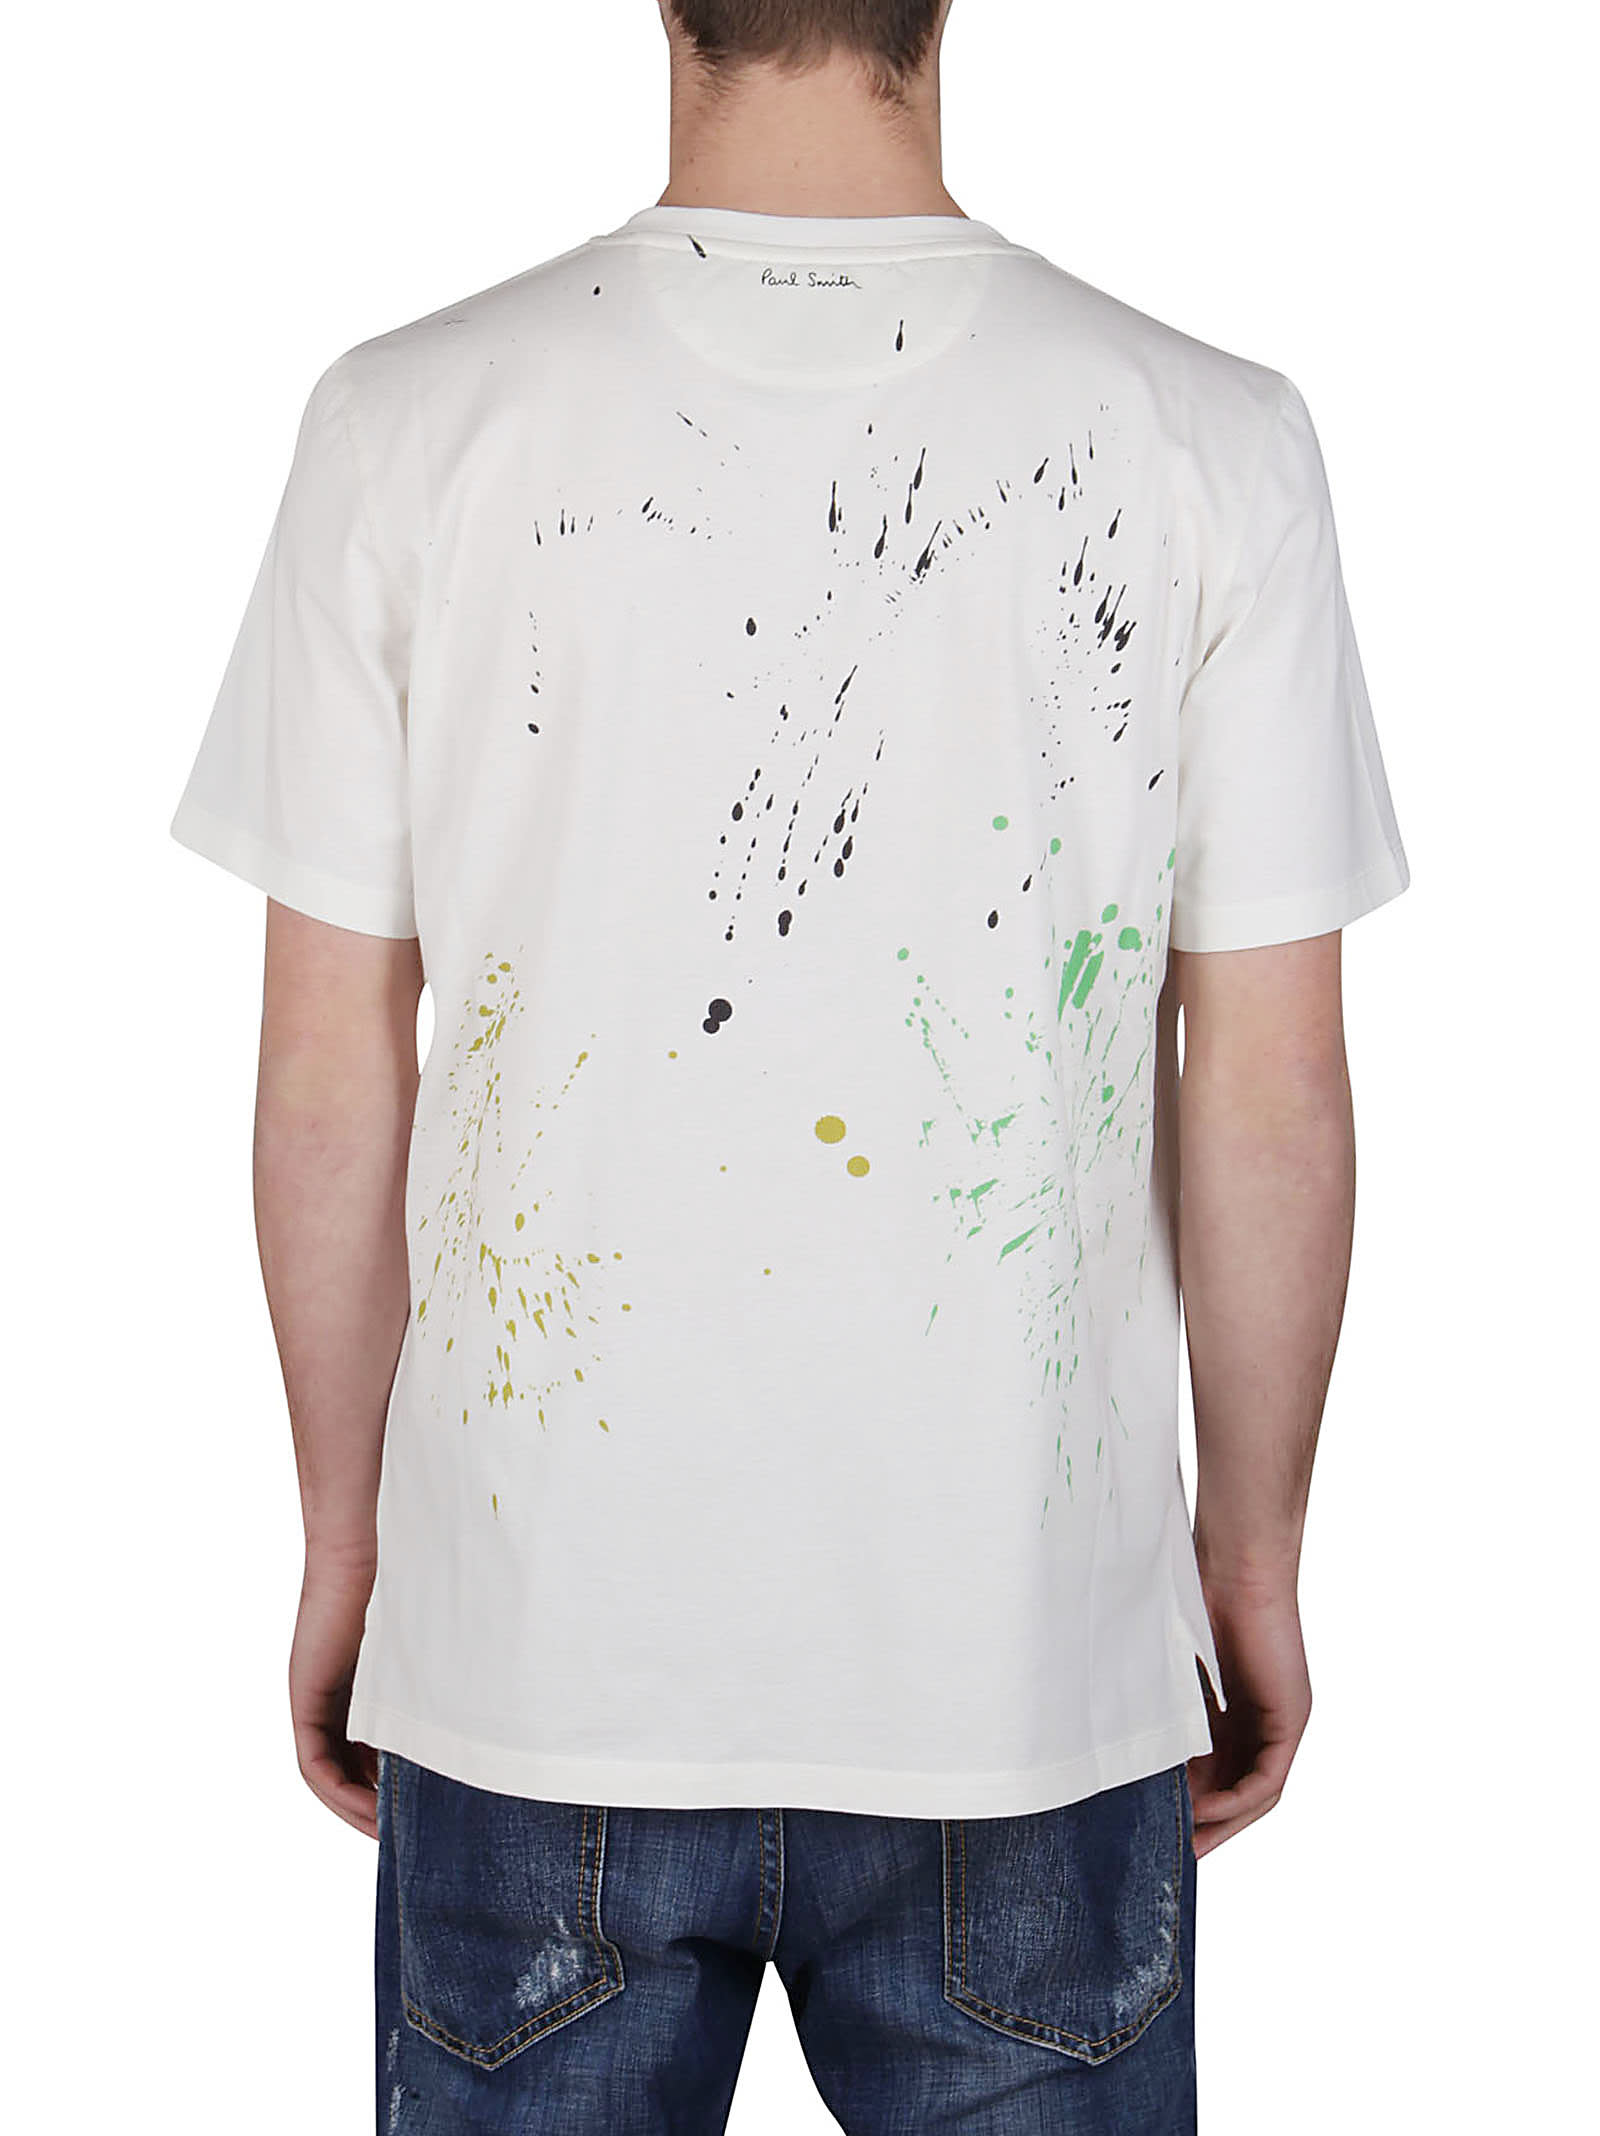 Paul Smith White Cotton T-shirt